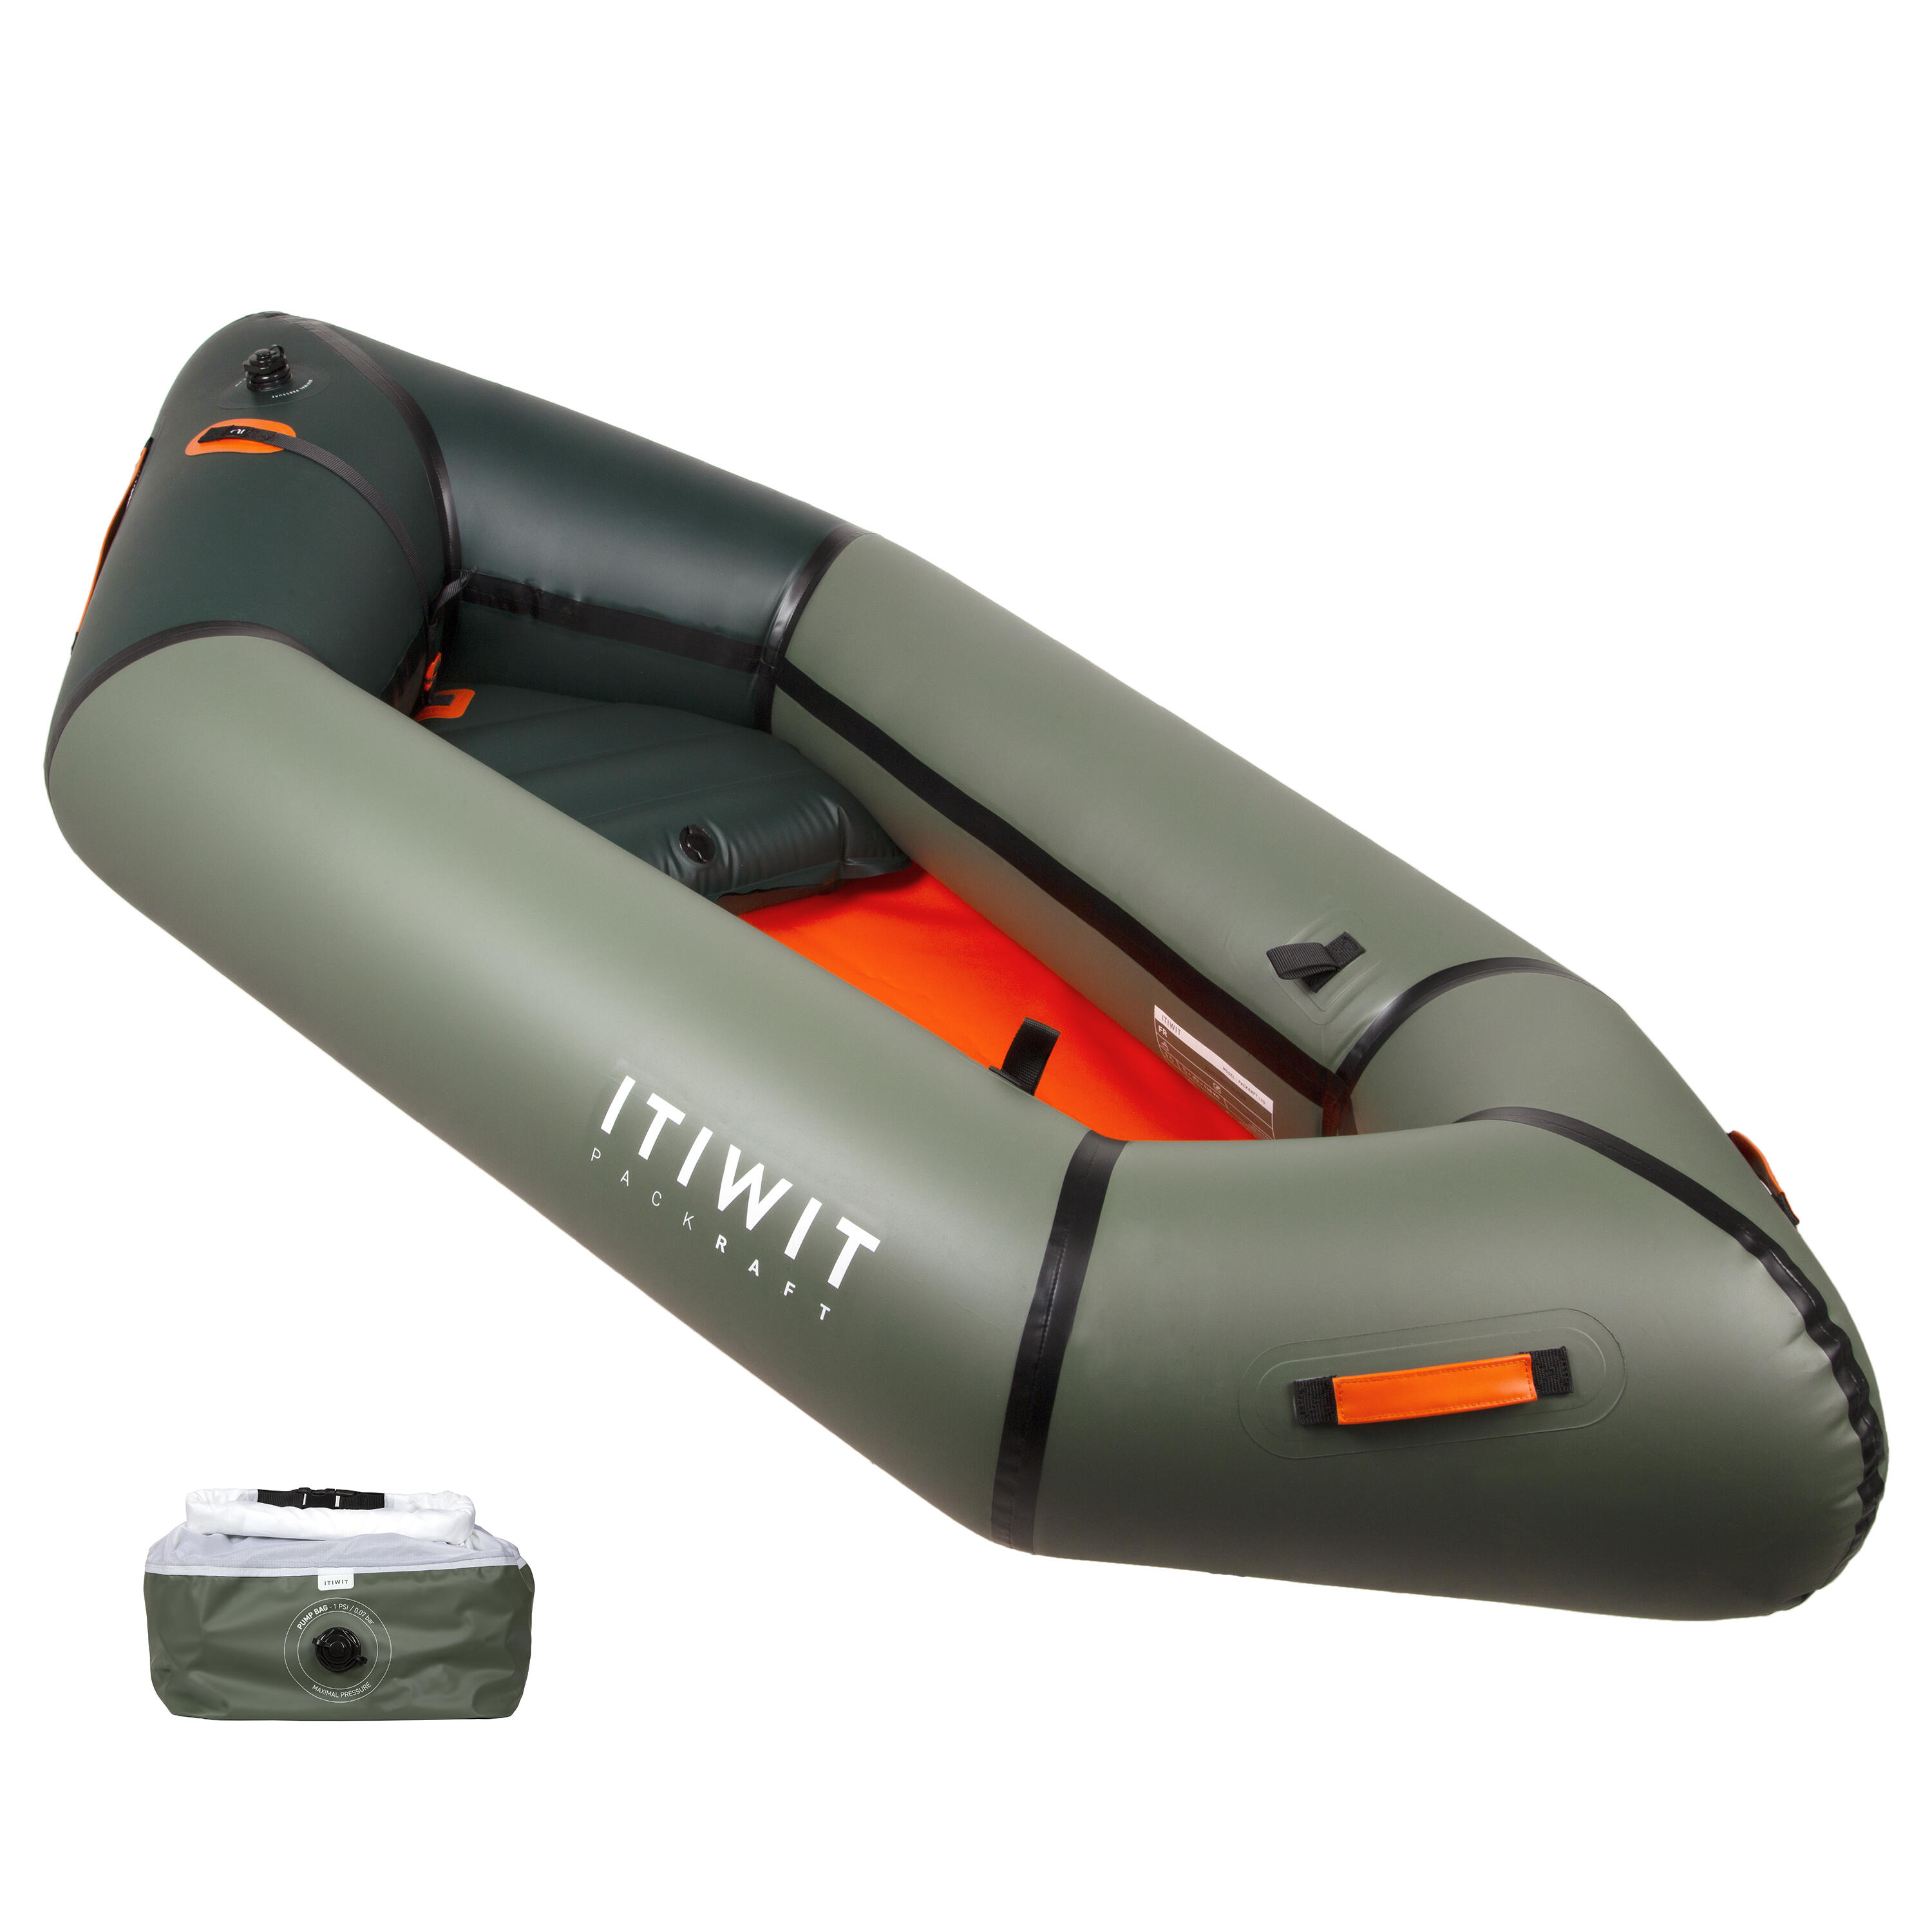 Packraft 100 Kayak Gonflable Tpu Riviere 1 Place - ITIWIT